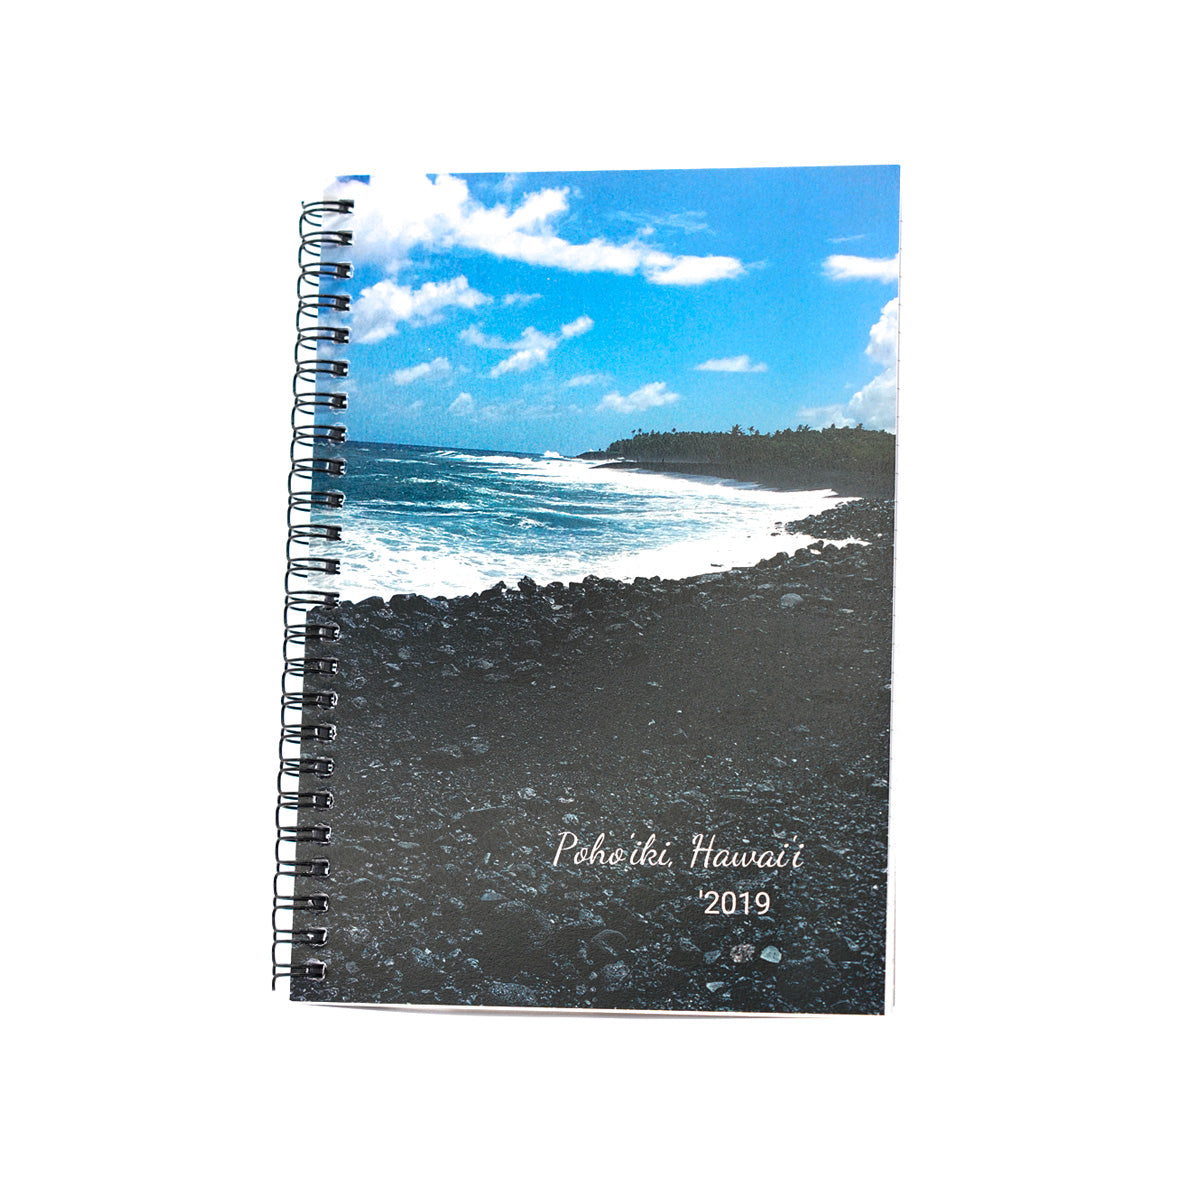 Spiral Bound Ruled Notebook Journal - Pohoʻiki Beach